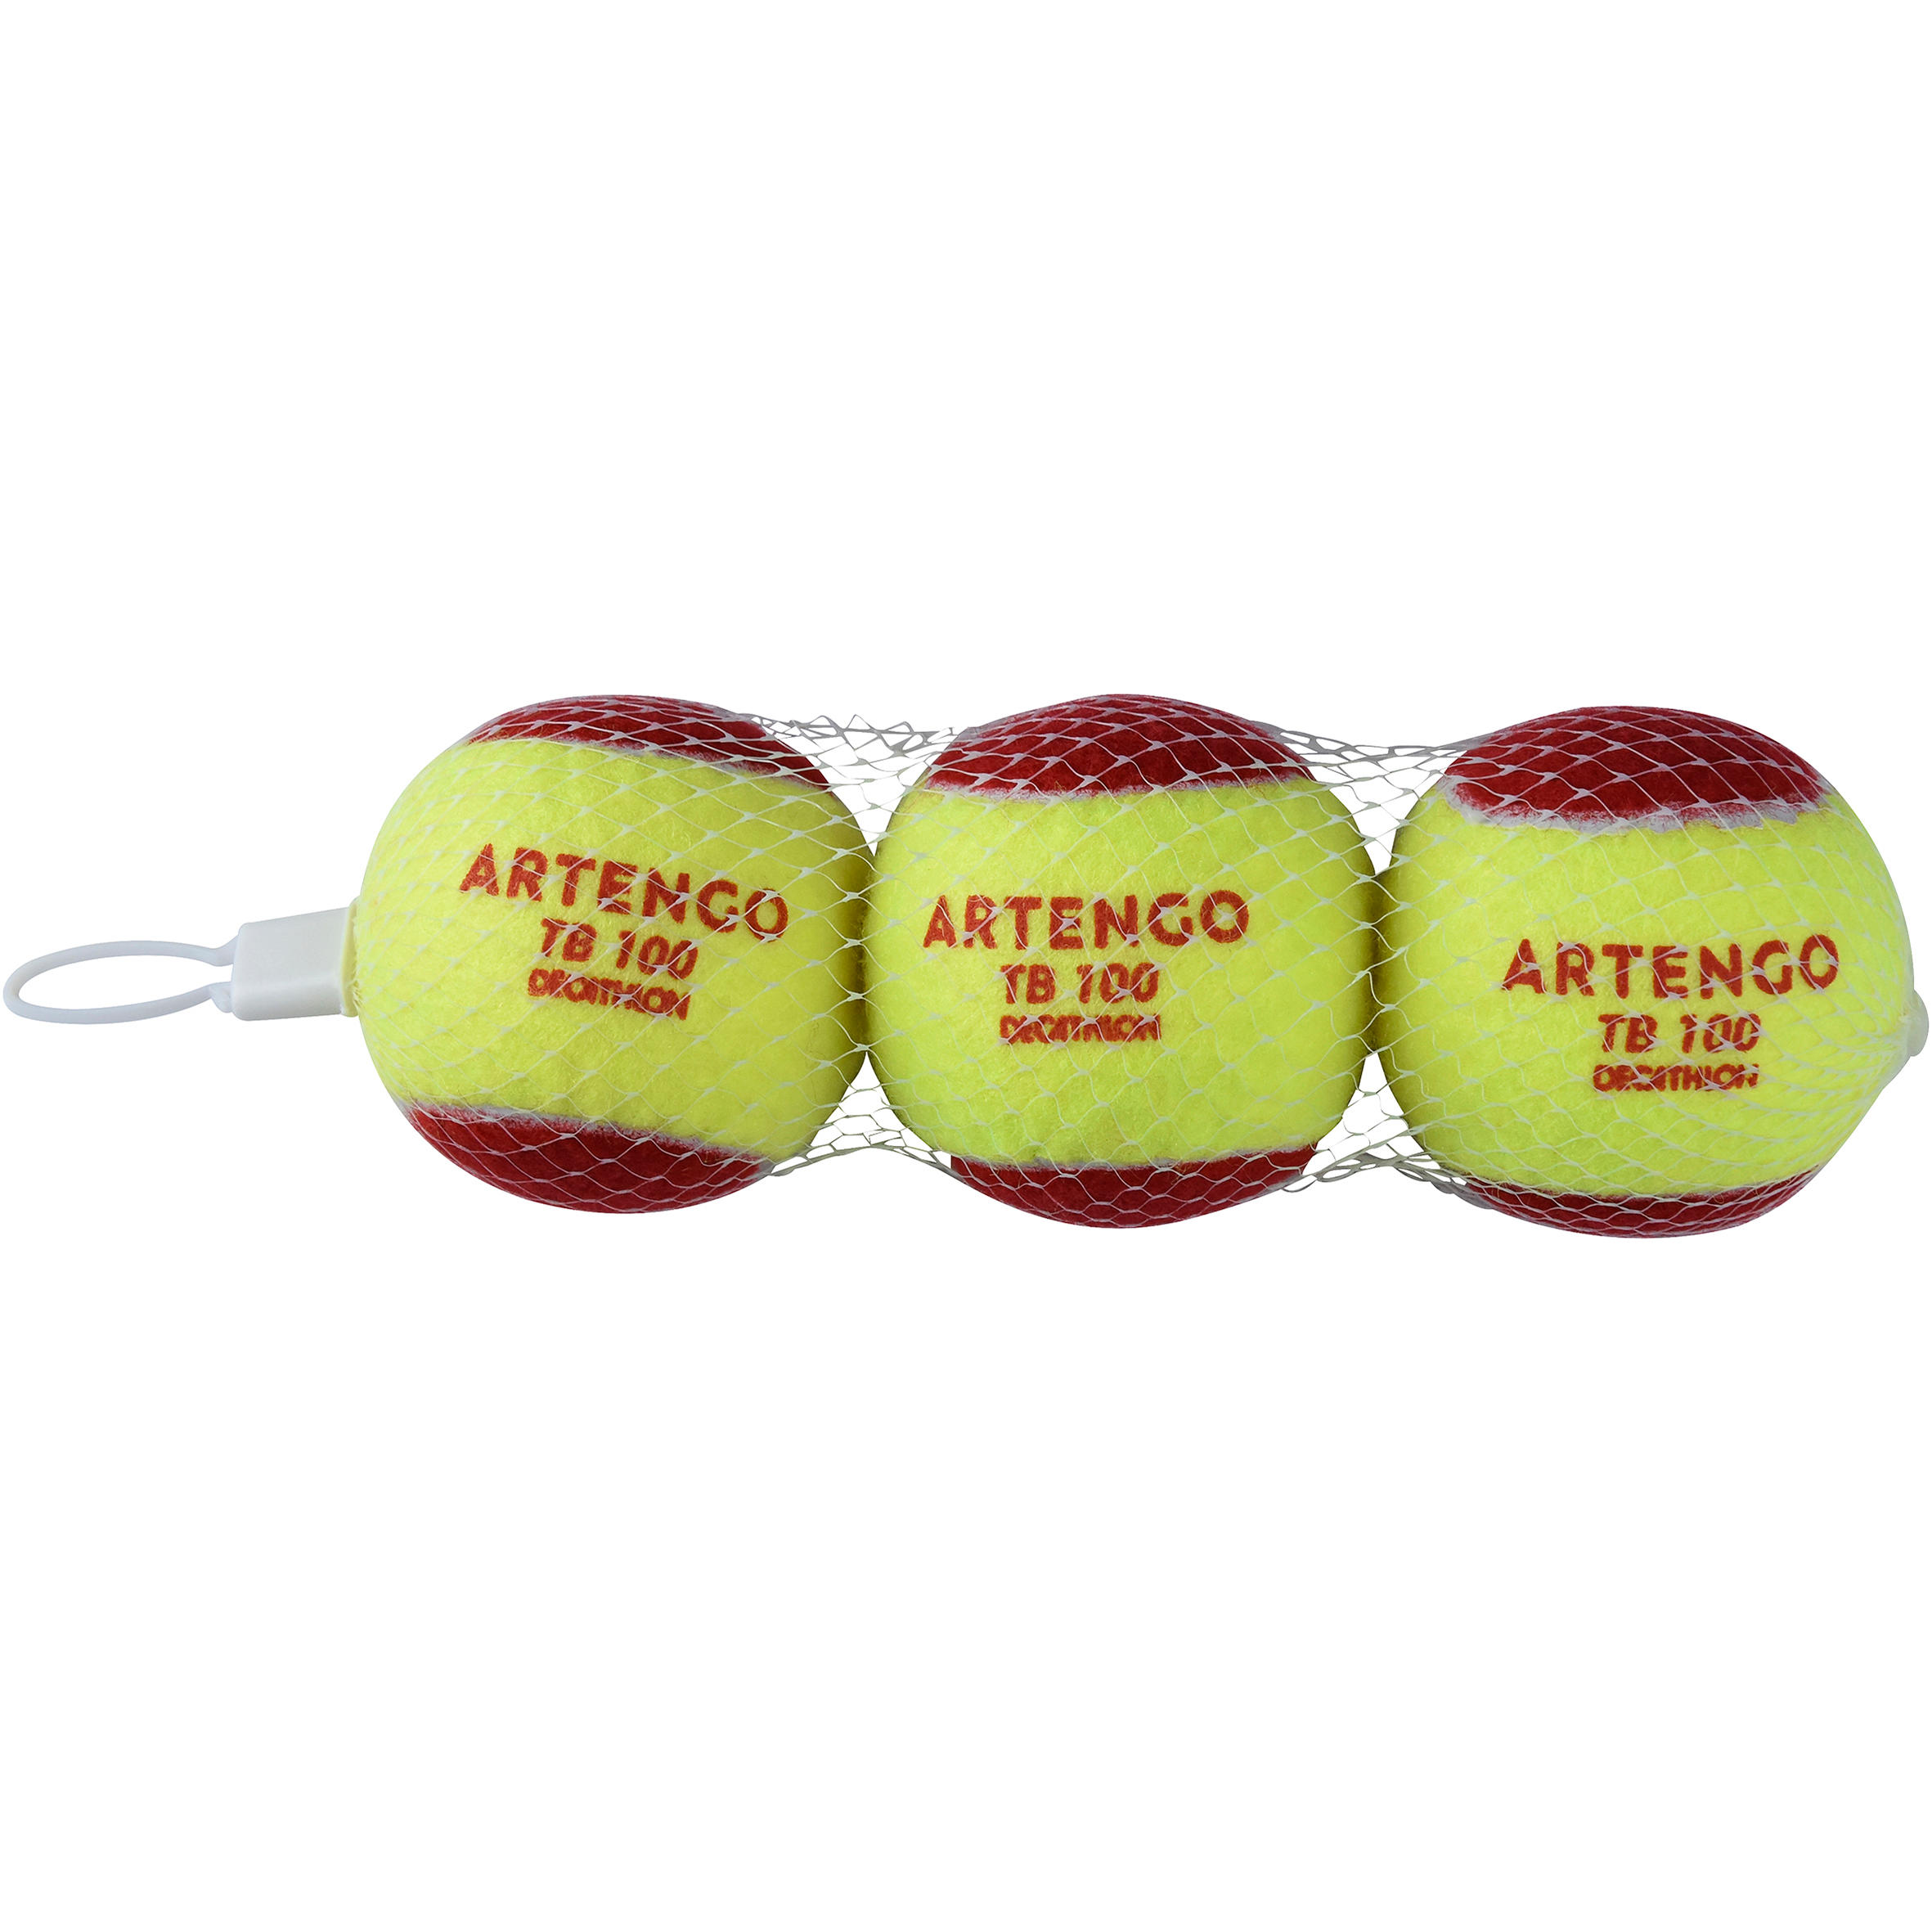 decathlon tennis balls